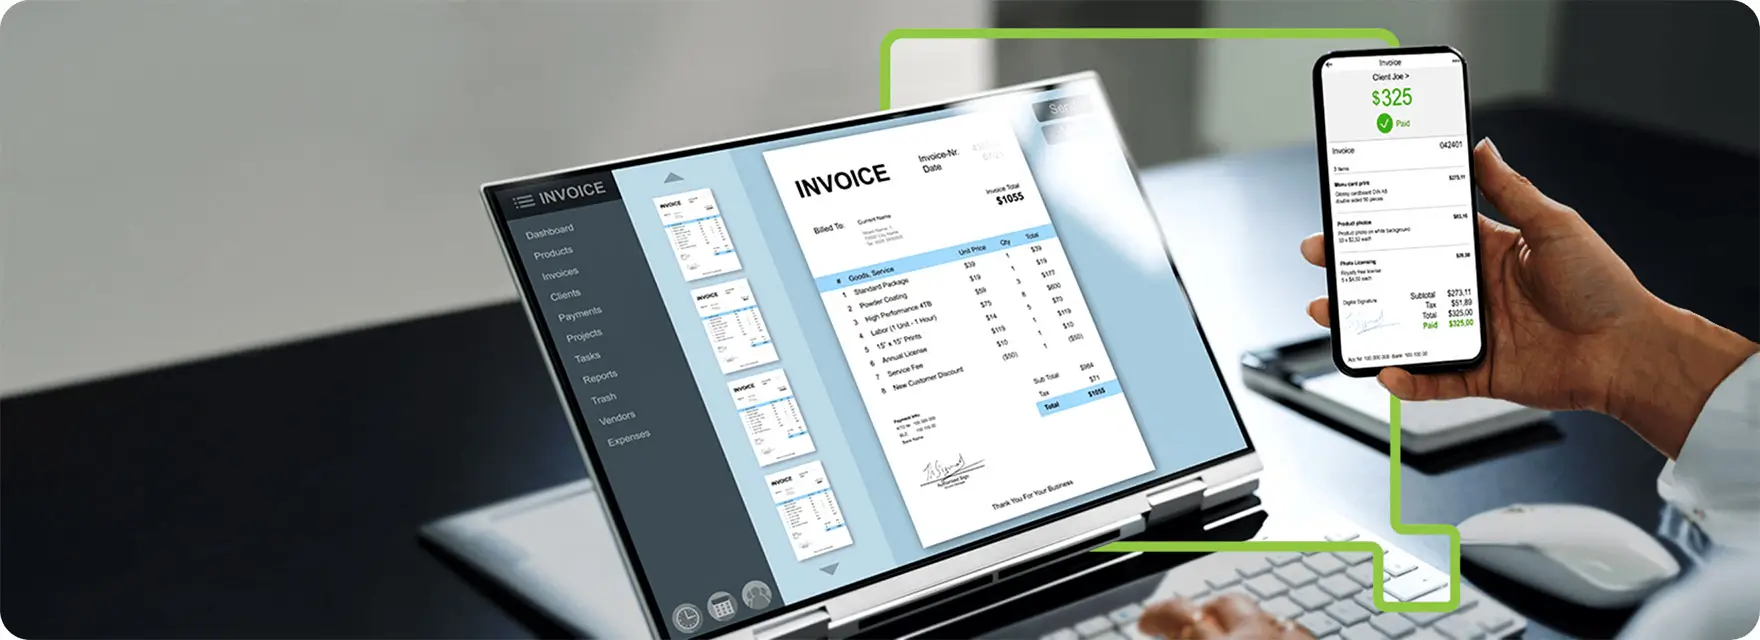 Mockup showing invoice app on smart phone with same information dispalyed on a desktop app in backgreound